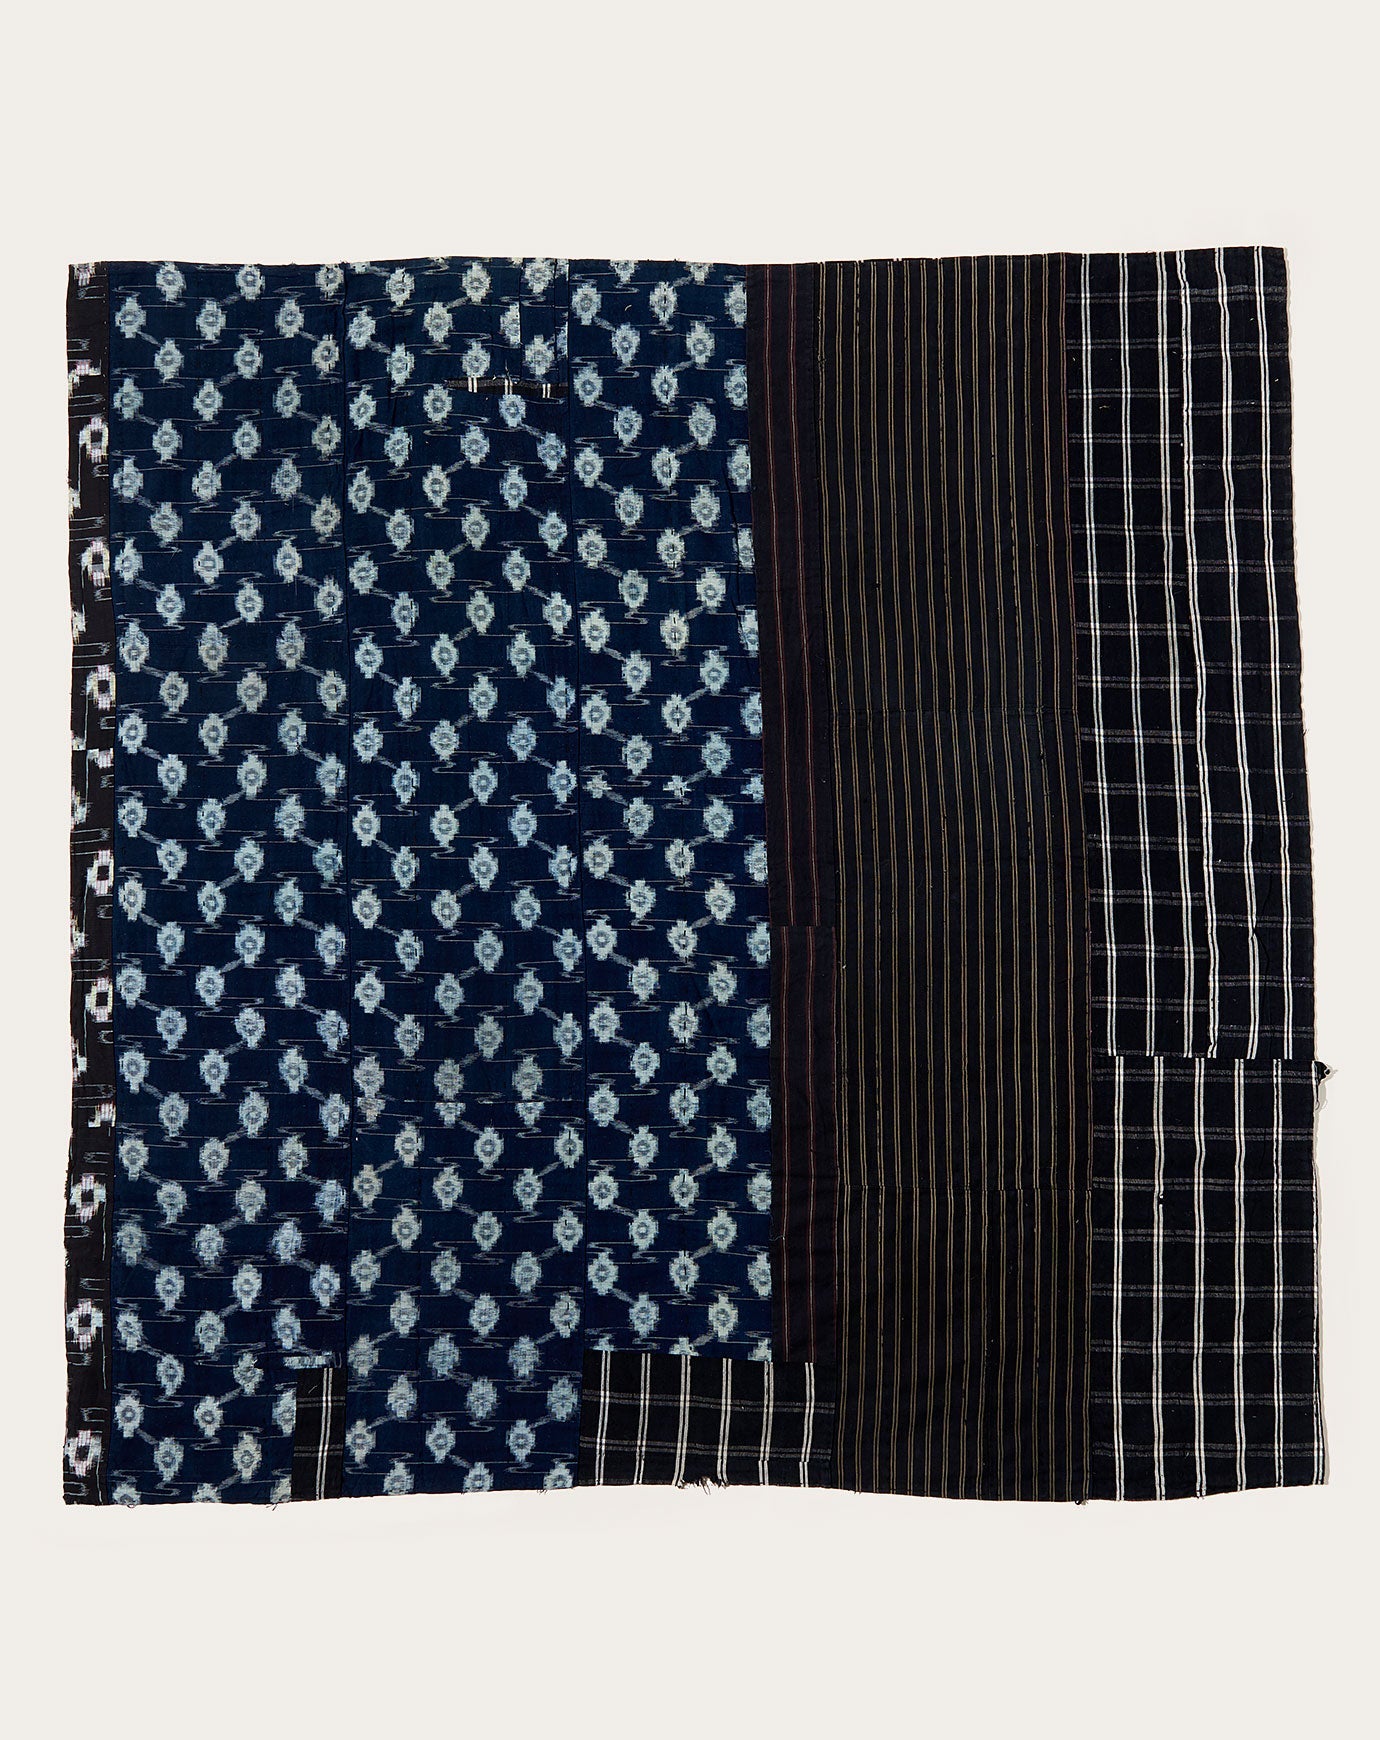 Vintage Japanese Patch Quilt No. 2